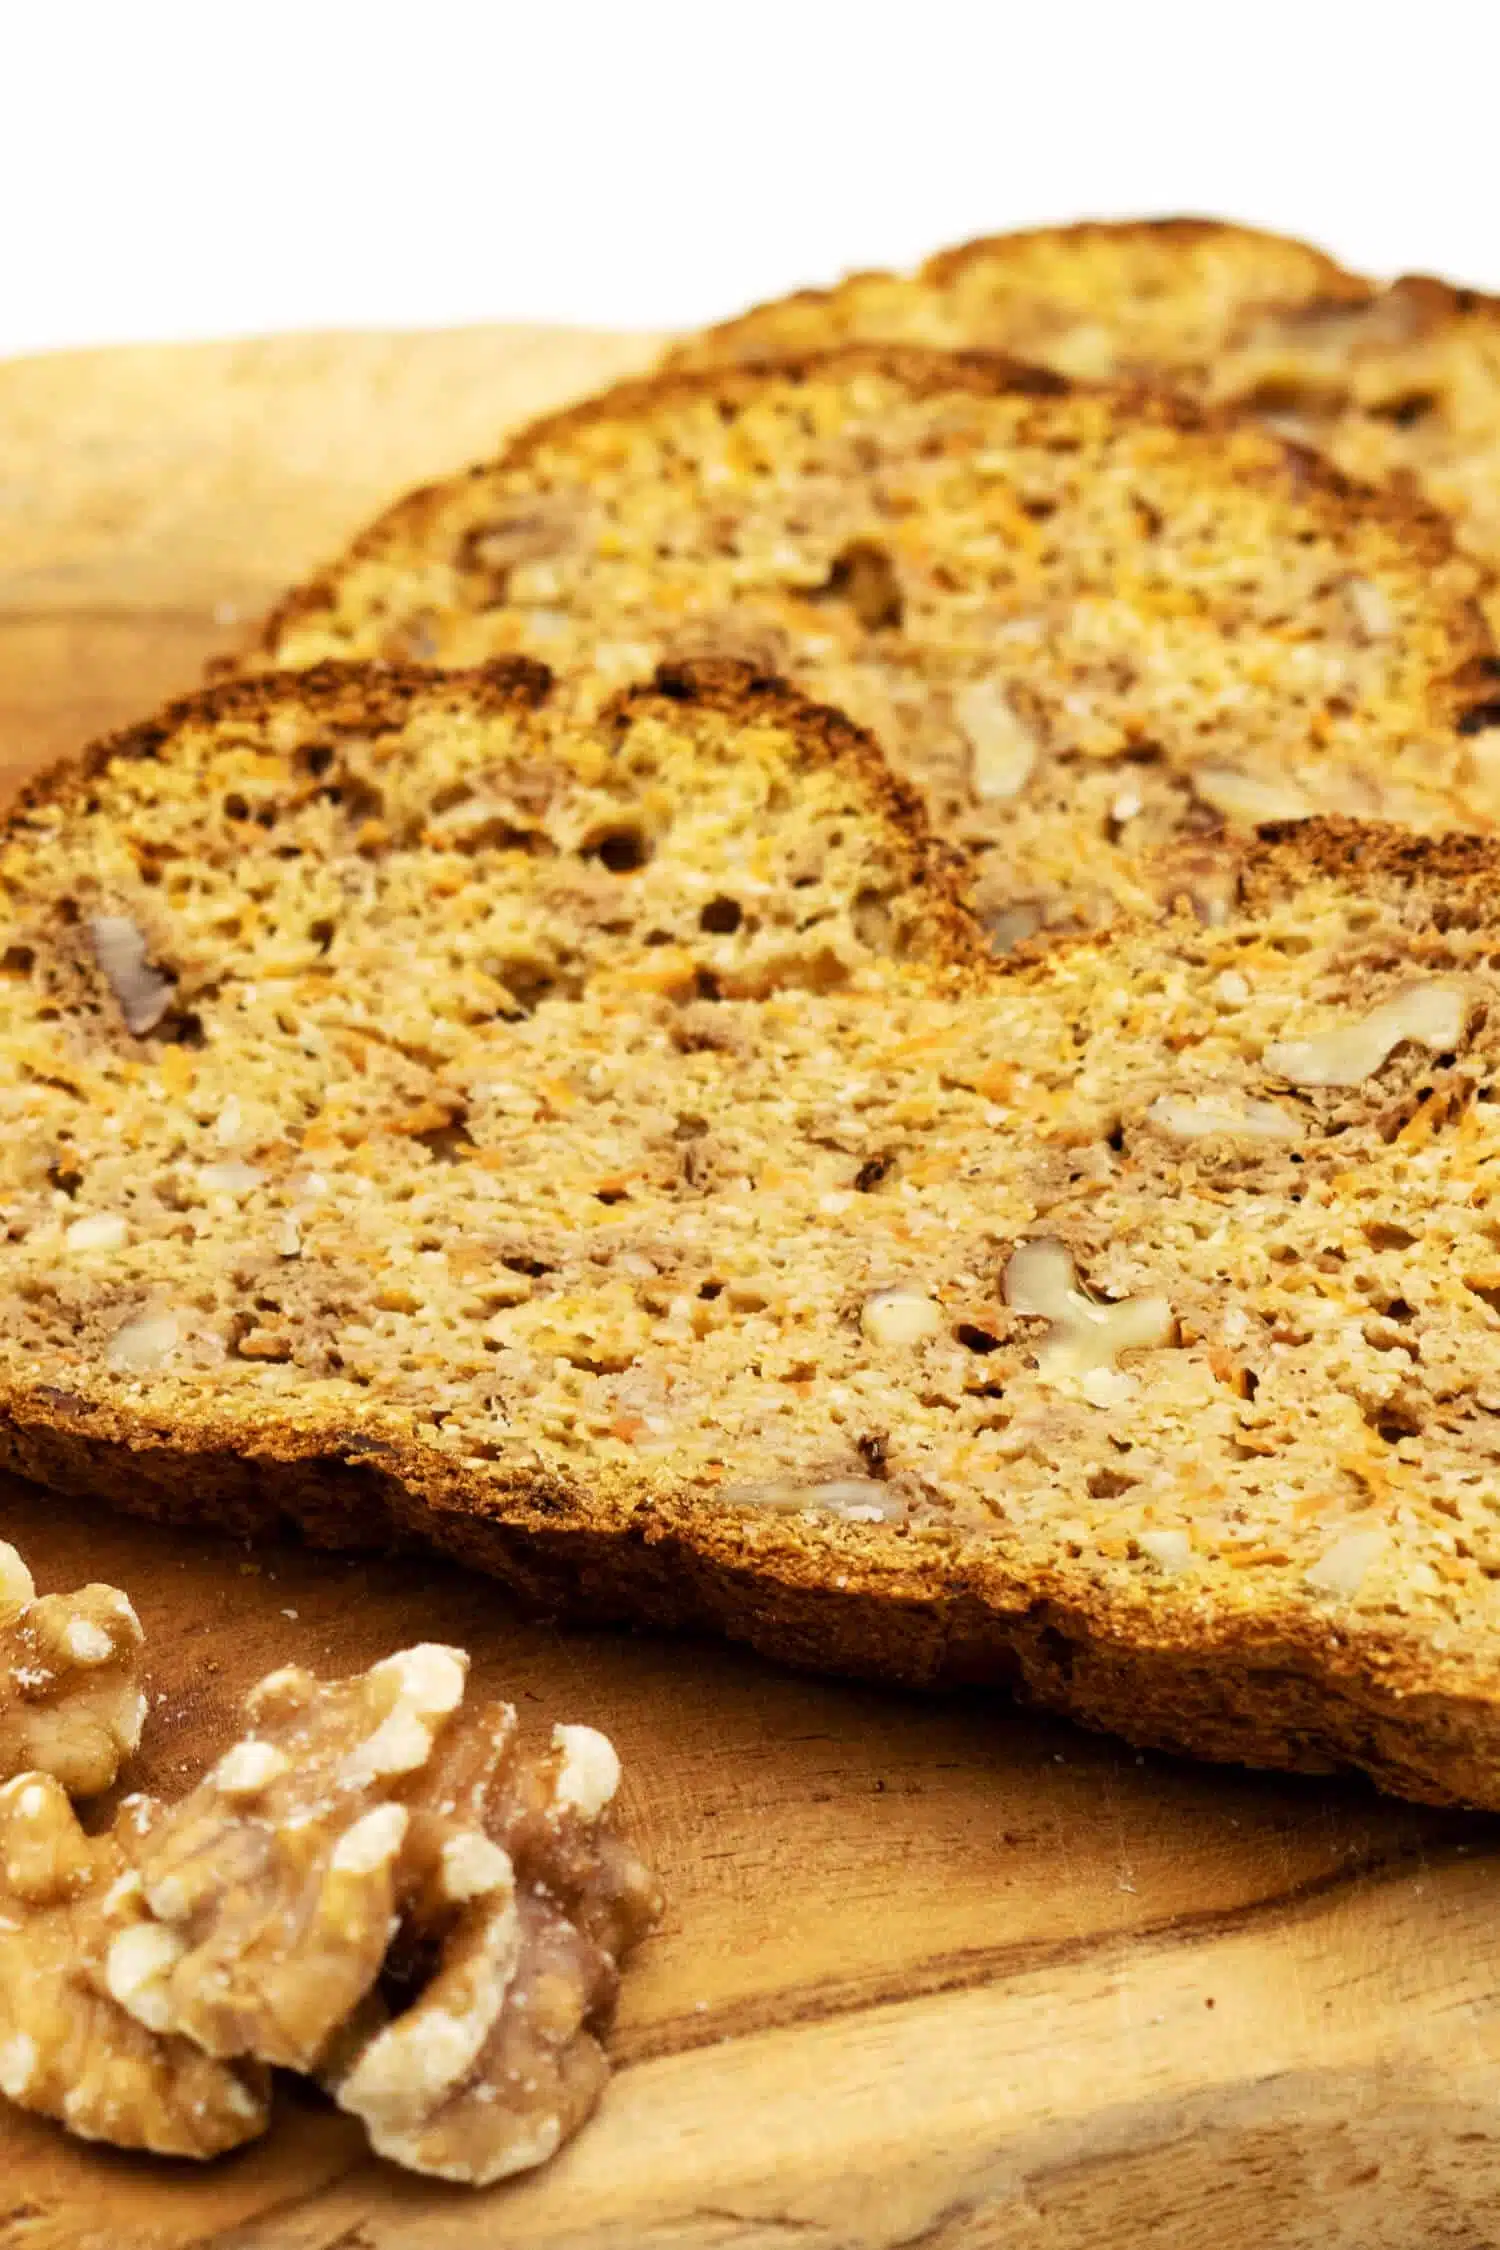 Möhren Walnuss Brot Rezept ohne Kohlenhydrate